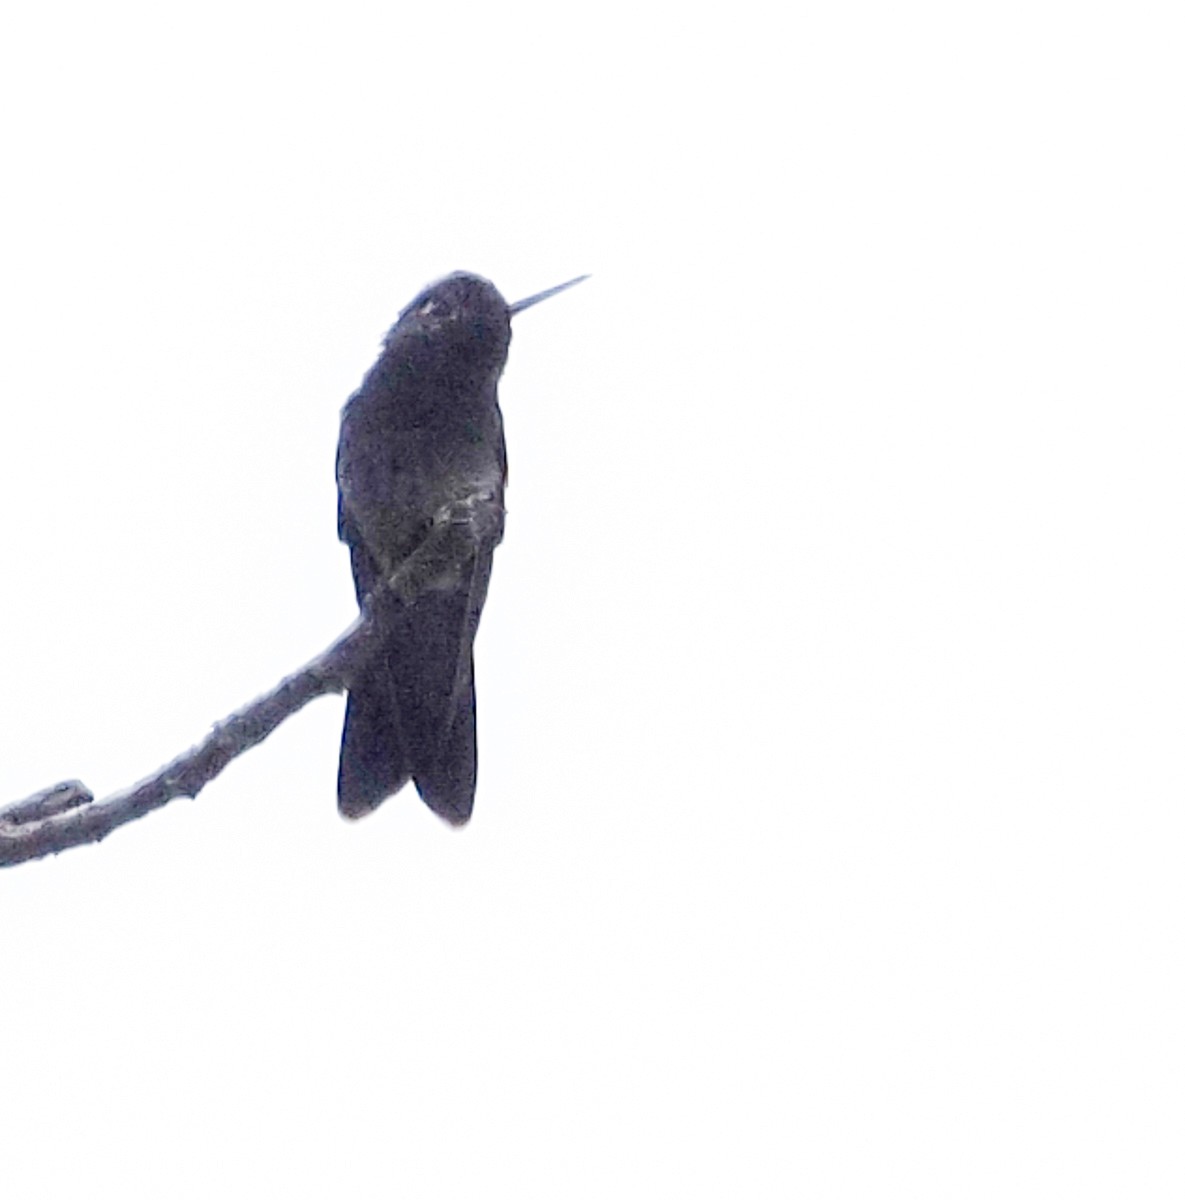 Broad-billed Hummingbird - Susan Mac